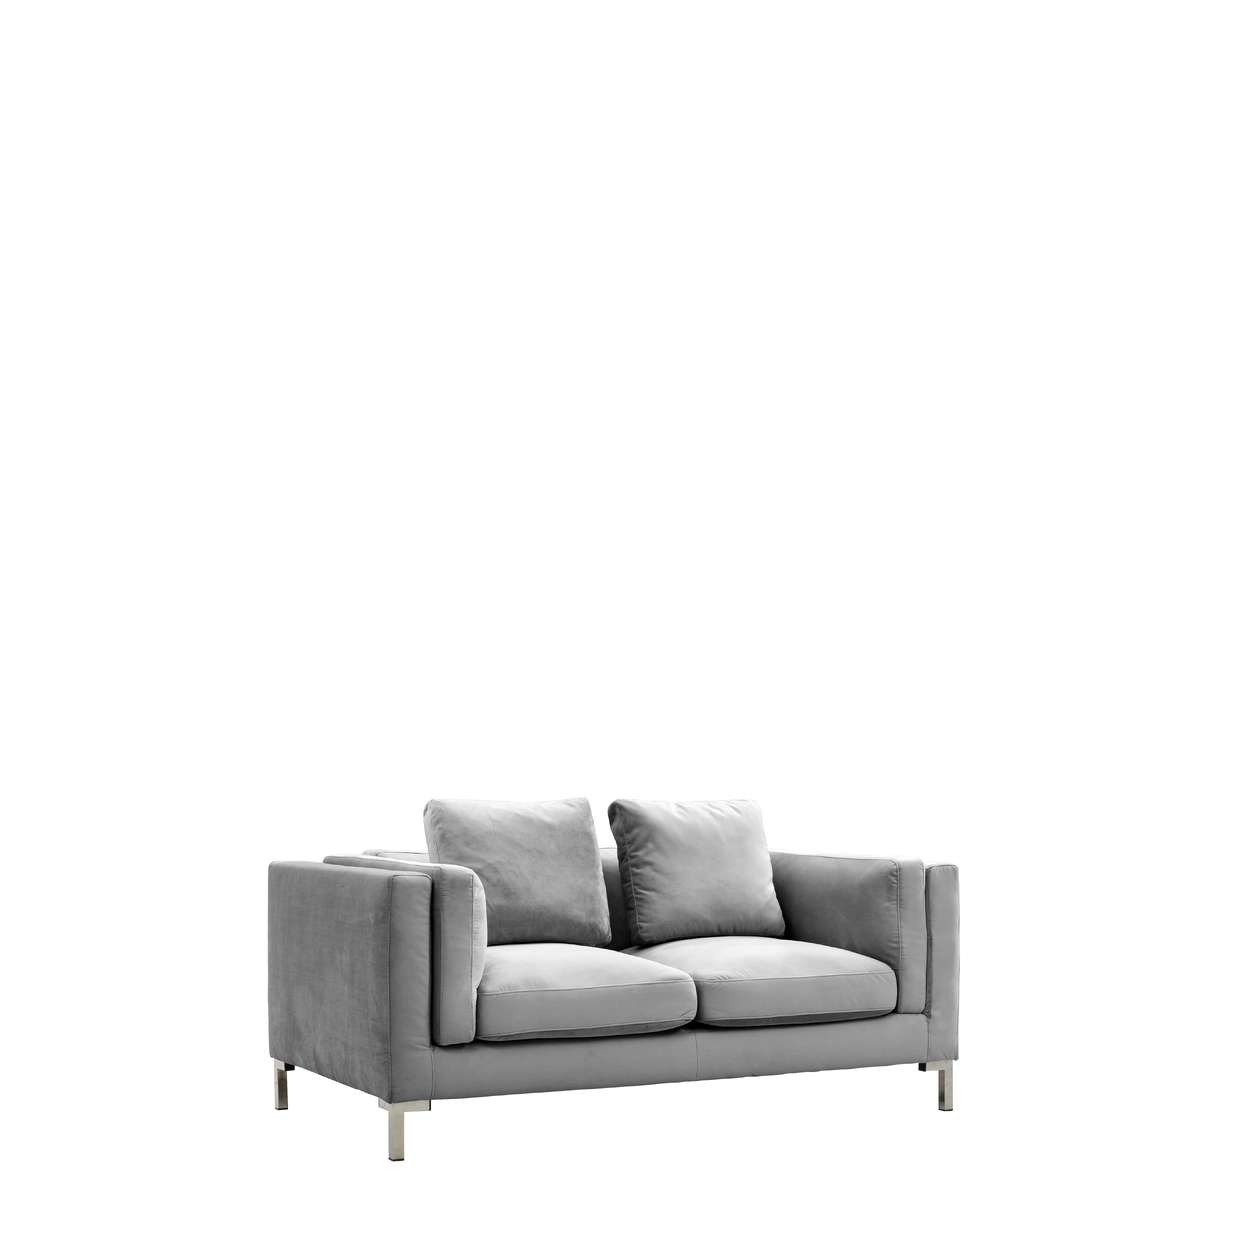 Iconic Home Everlie Loveseat Velvet Upholstered Multi-Cushion Seat Loose Back Shelter Arm Design Silver Tone Metal Y-Legs - Blush